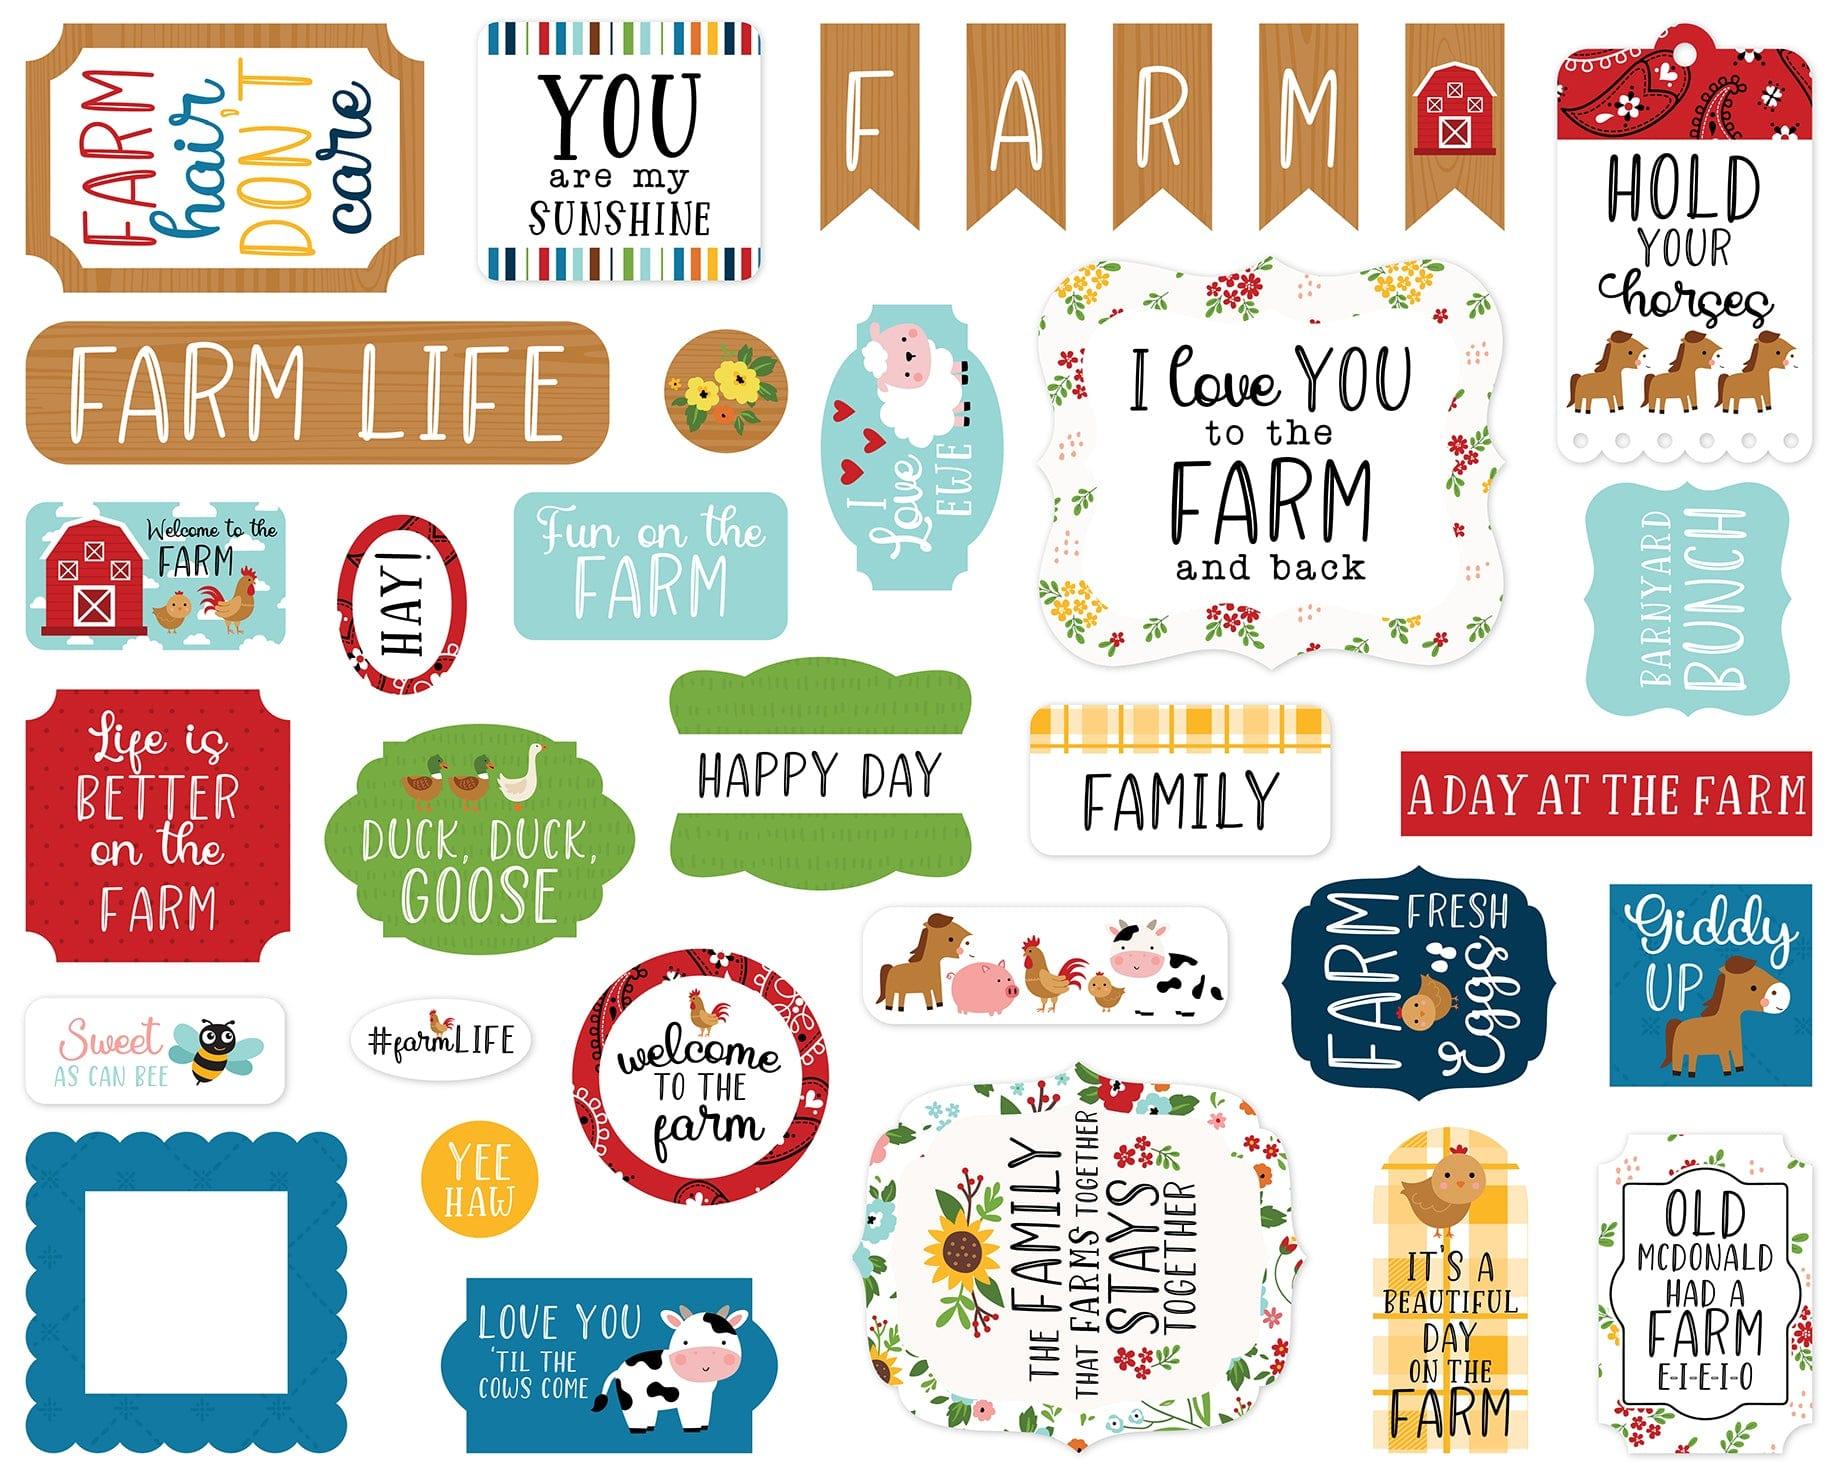 Fun On The Farm Collection 5 x 5 Scrapbook Ephemera Die Cuts by Echo Park Paper - Scrapbook Supply Companies